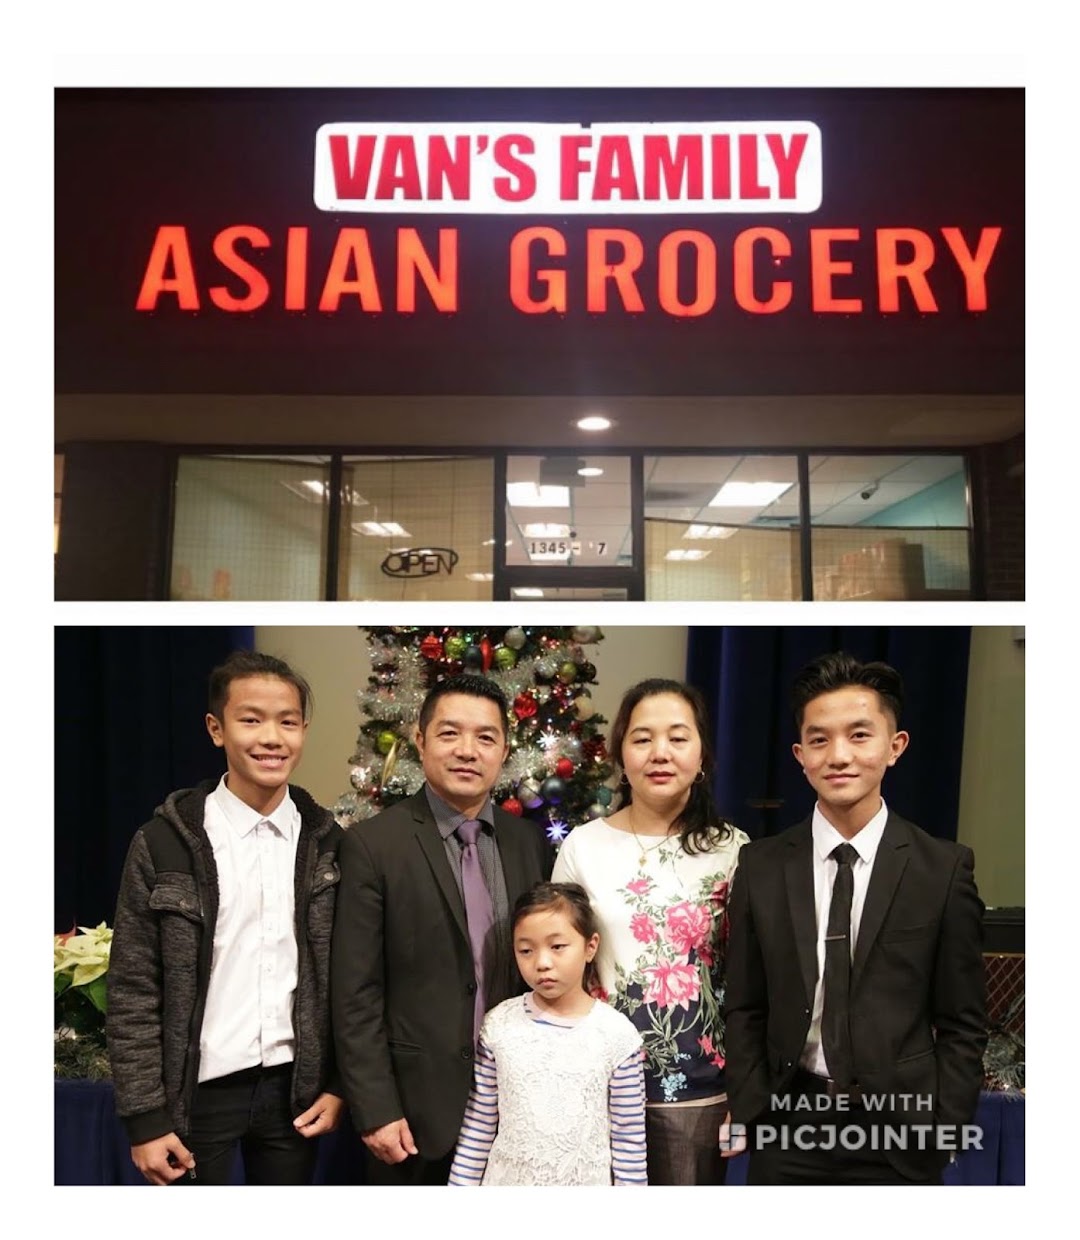 Van’s Family Asian Grocery